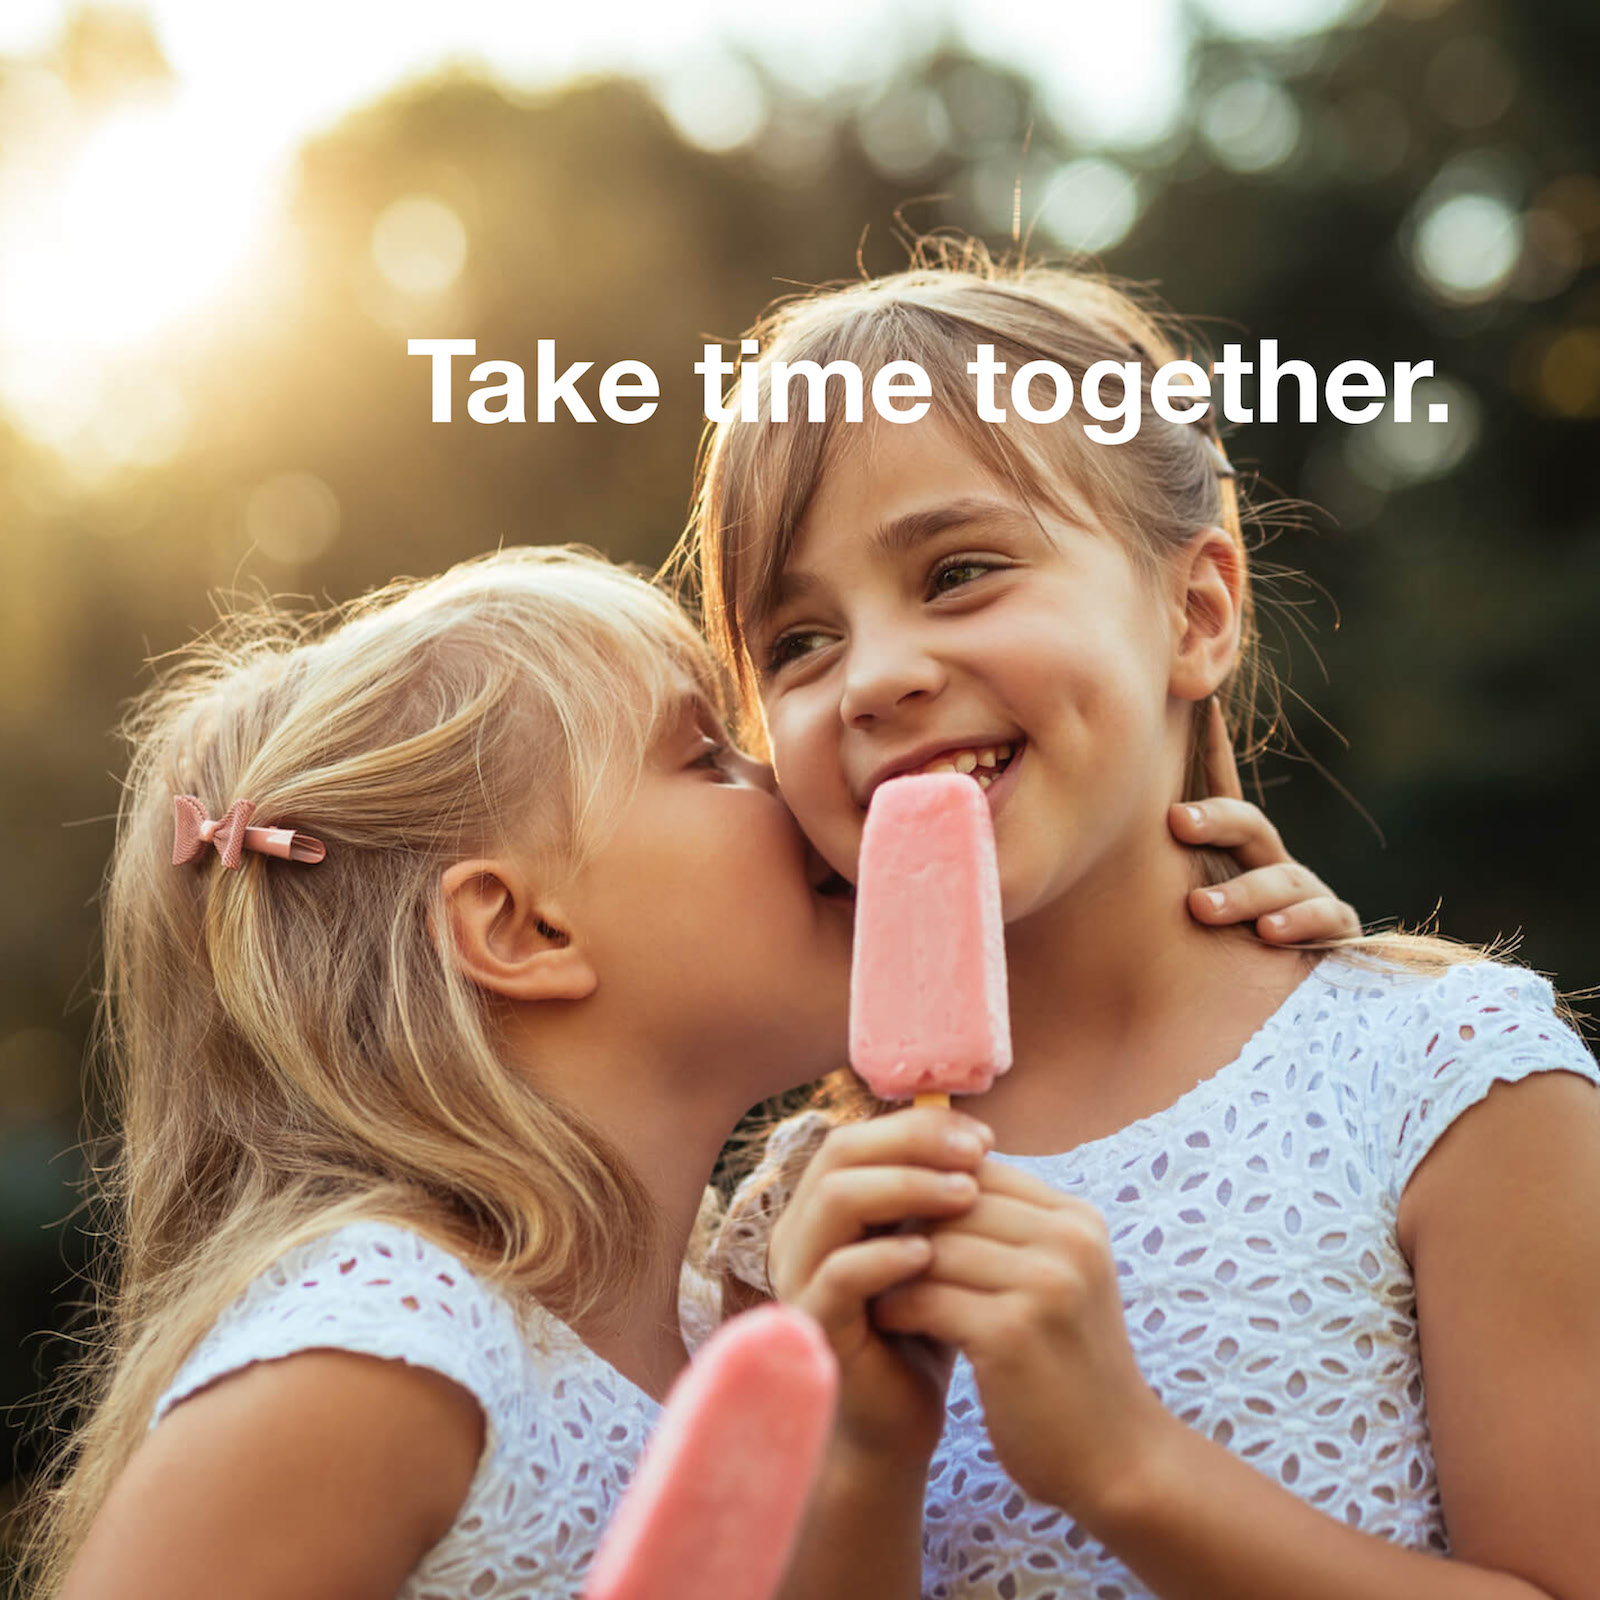 Take time together